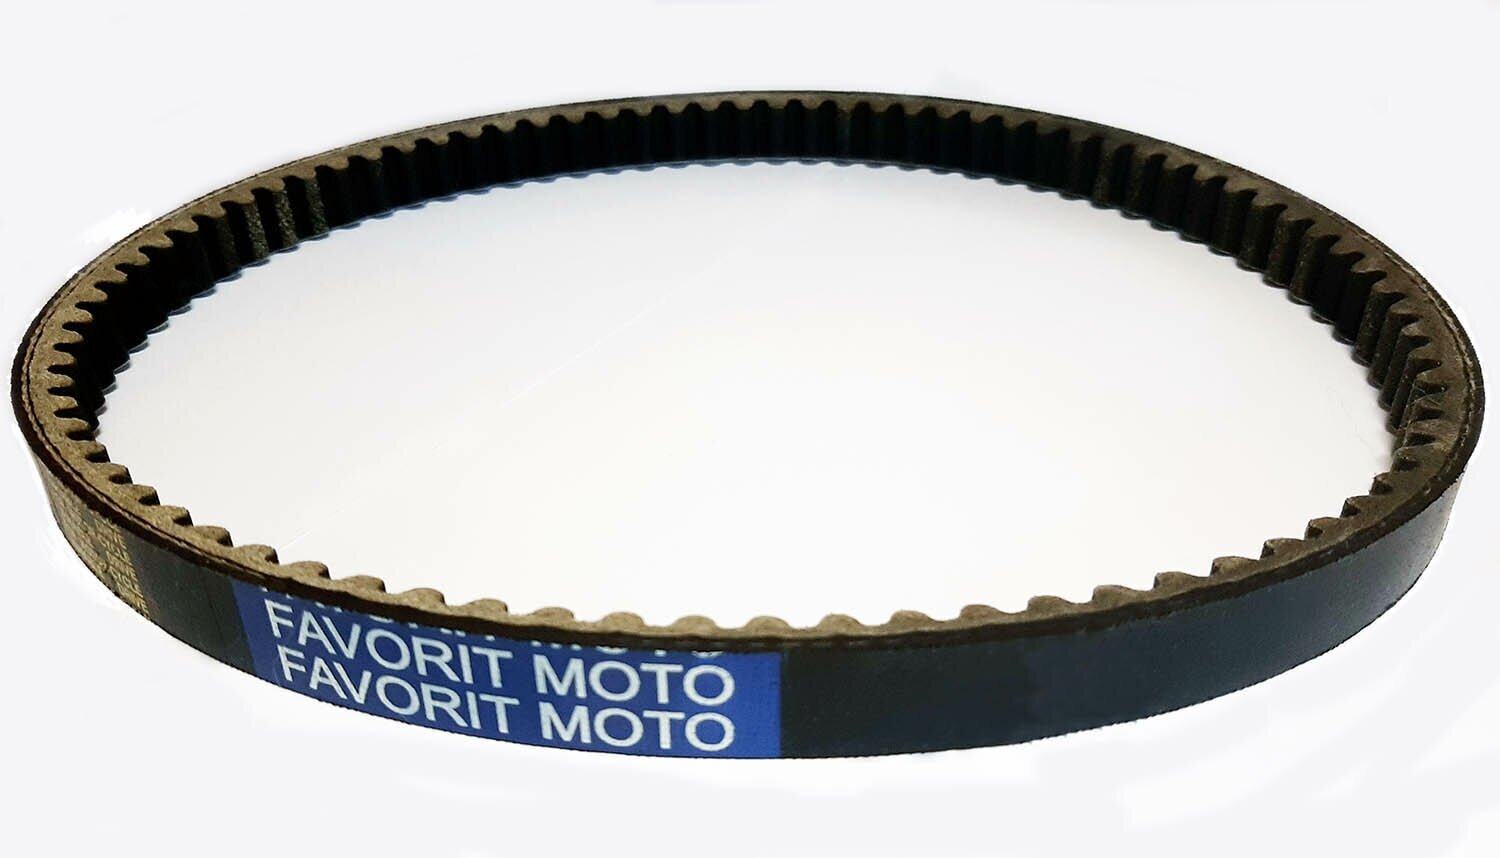 Ремень вариатора Favorit Moto 780х18 для скутера Honda Lead 100